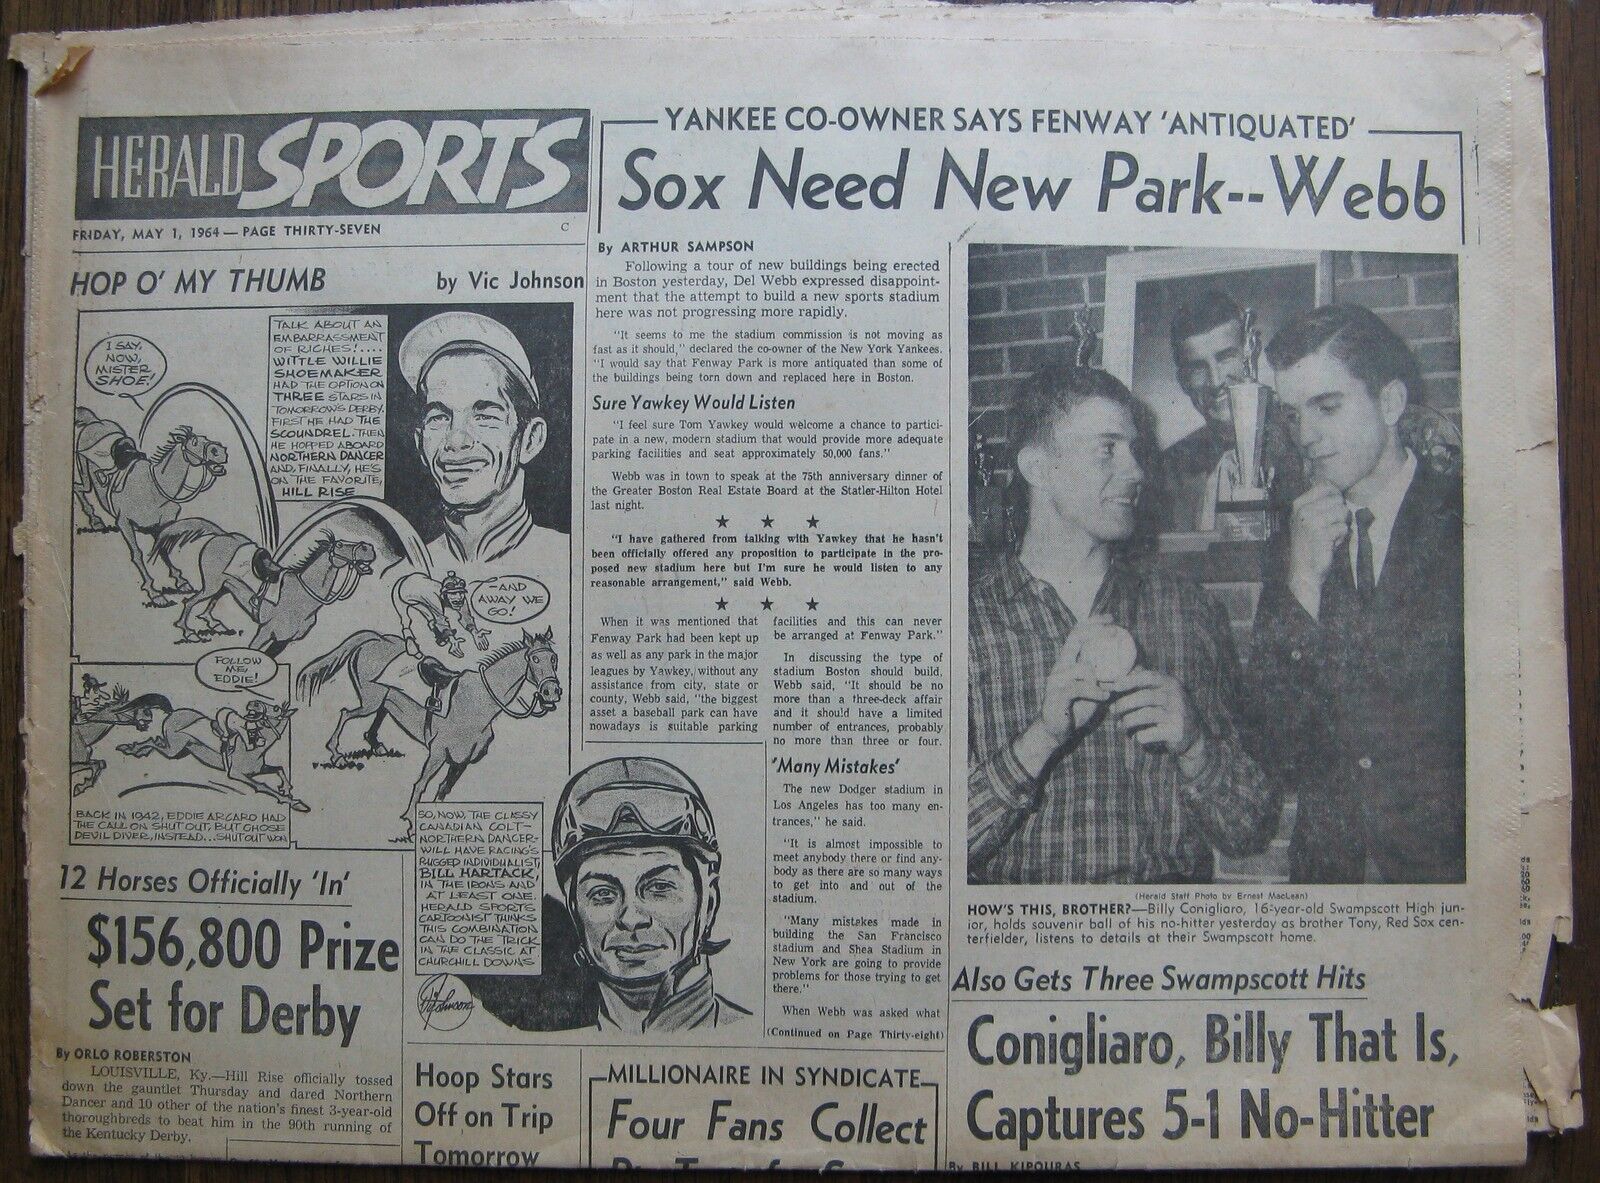 Boston Red Sox Billy & Tony Conigliaro - May 1, 1964 Boston Herald Sports Page